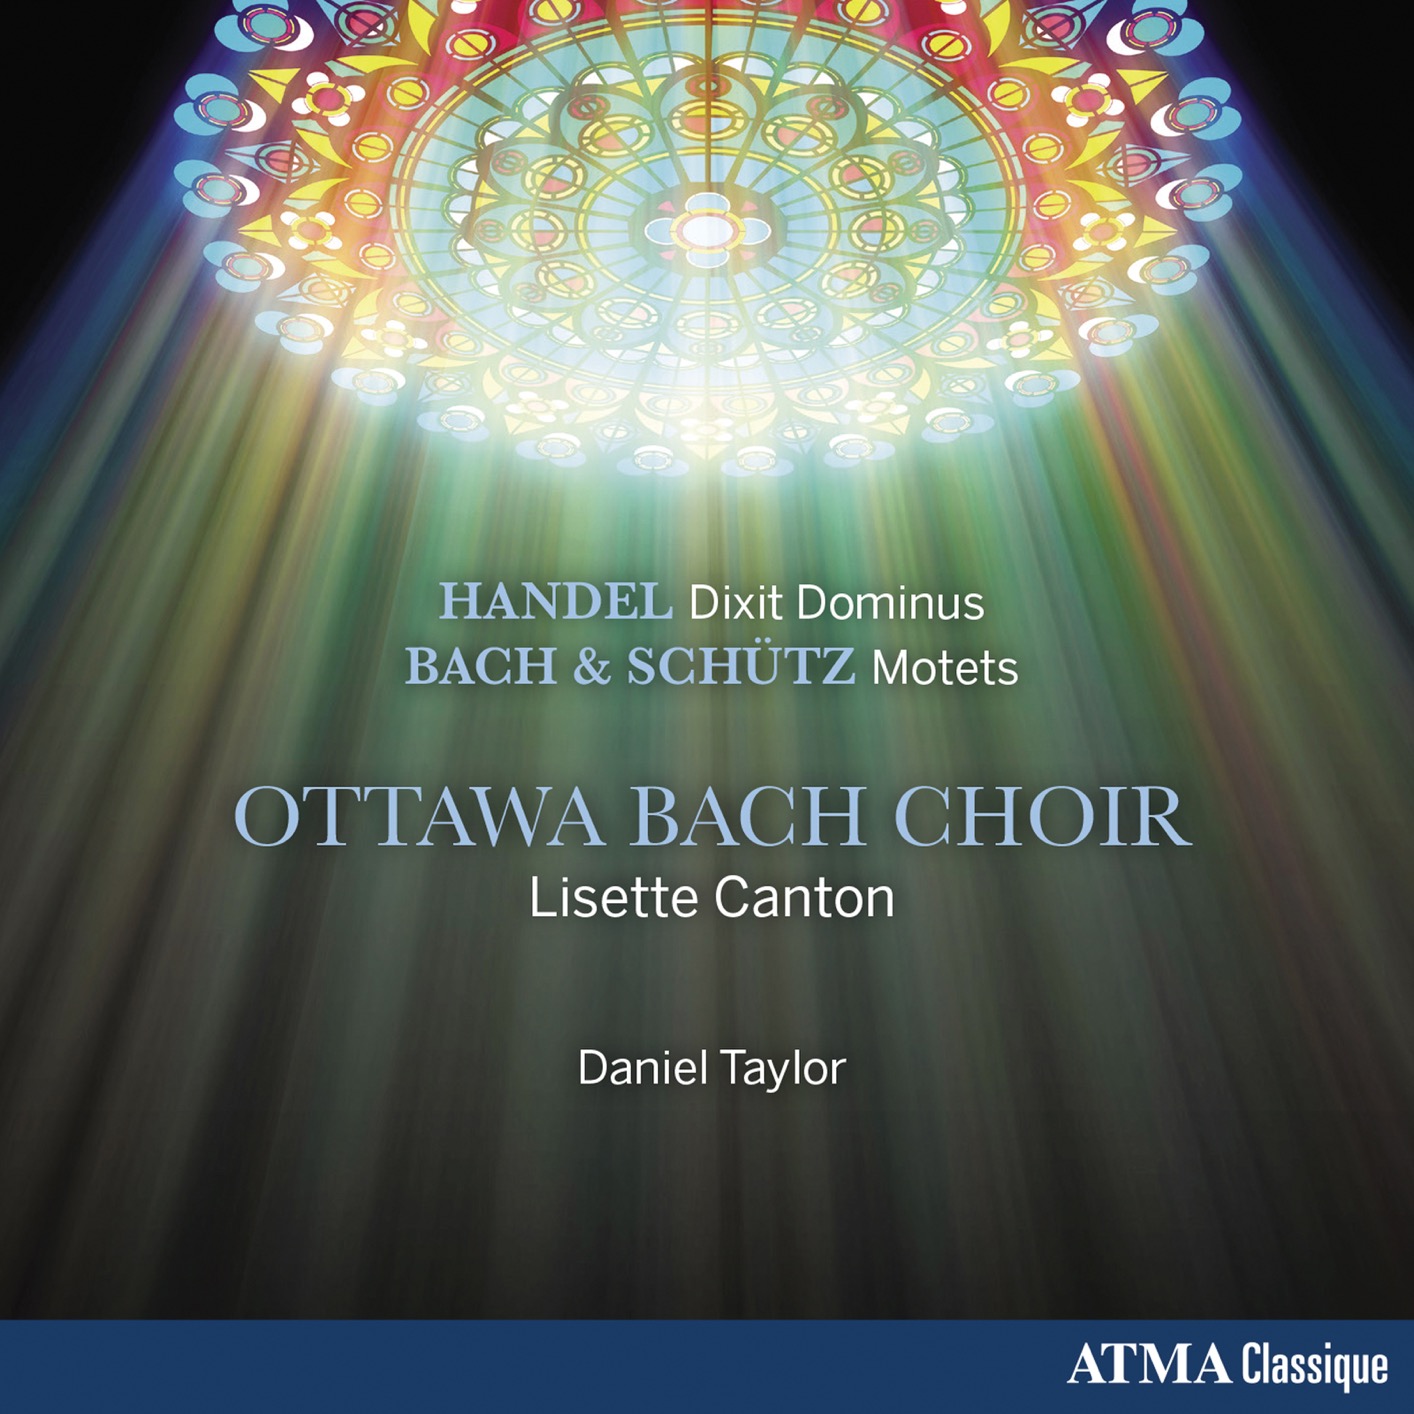 Ottawa Bach Choir, Daniel Taylor & Lisette Canton - Handel Dixit Dominus, Bach & Schutz Motets (2019) [FLAC 24bit/96kHz]